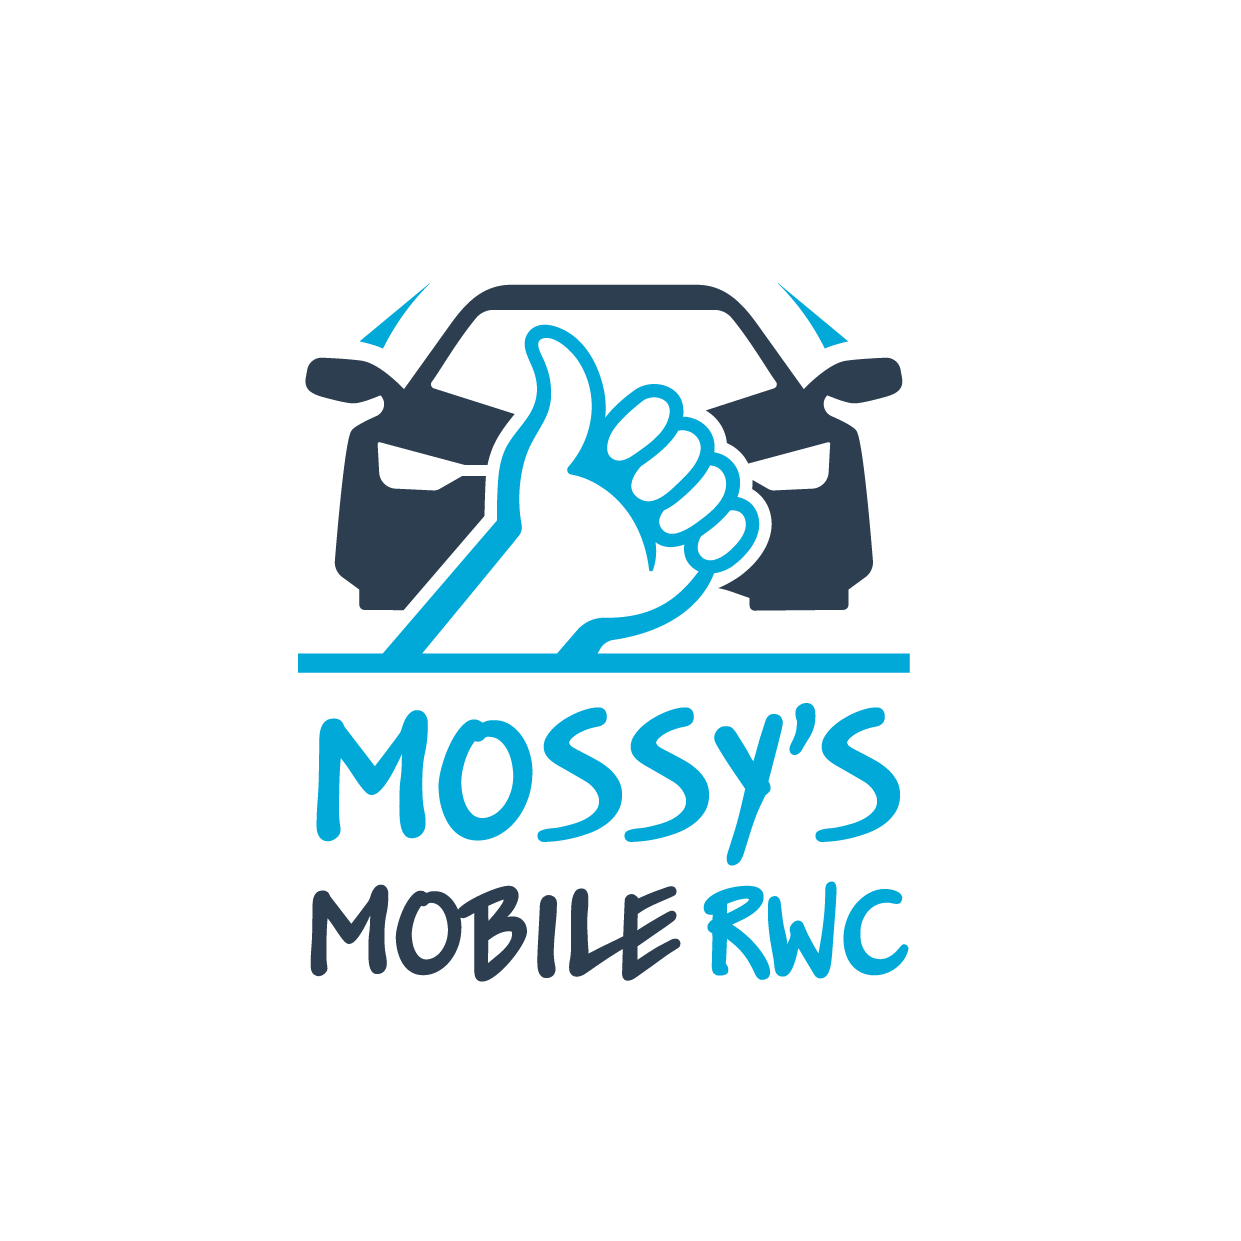 Mossys Mobile RWC